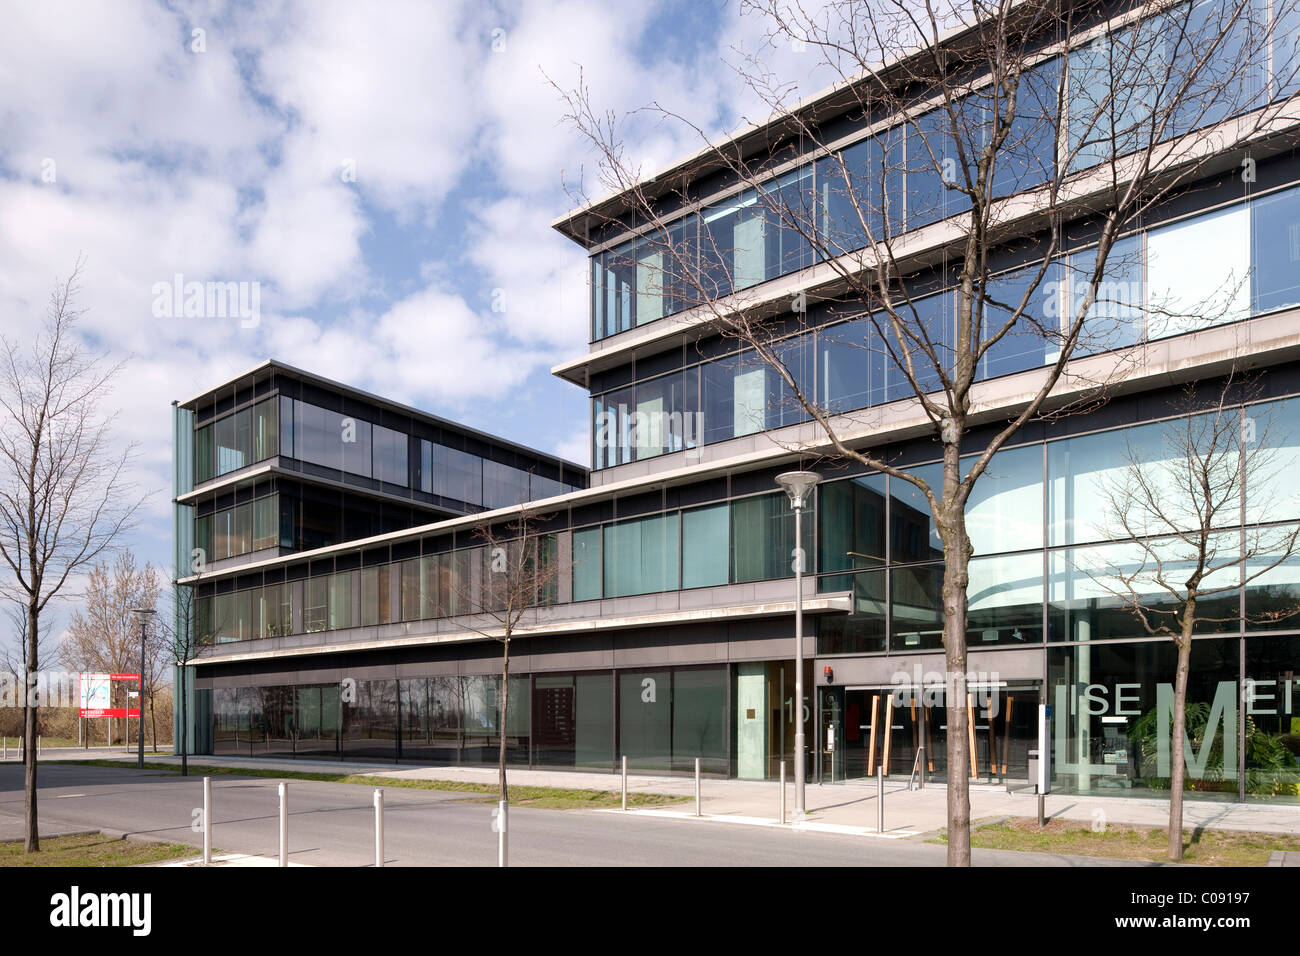 Lise-Meitner-Haus edificio, Istituto di Fisica, Università Humboldt-Universitaet, Wissenschaftsstadt Adlershof della Città della Scienza Foto Stock